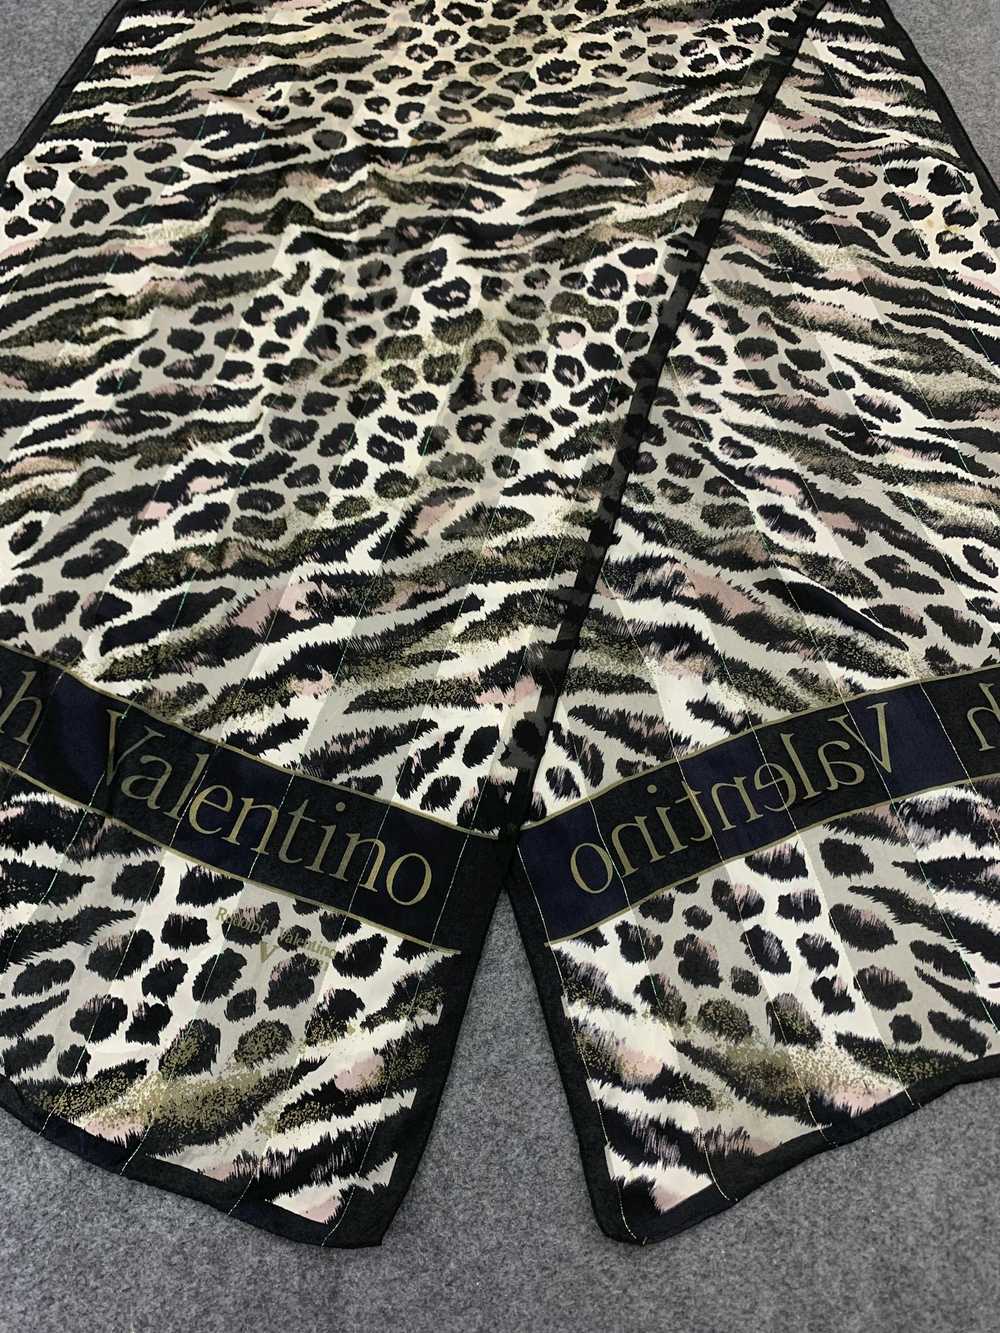 Vintage Rudolph Valentino Silk Scarf Leopard Print - image 4